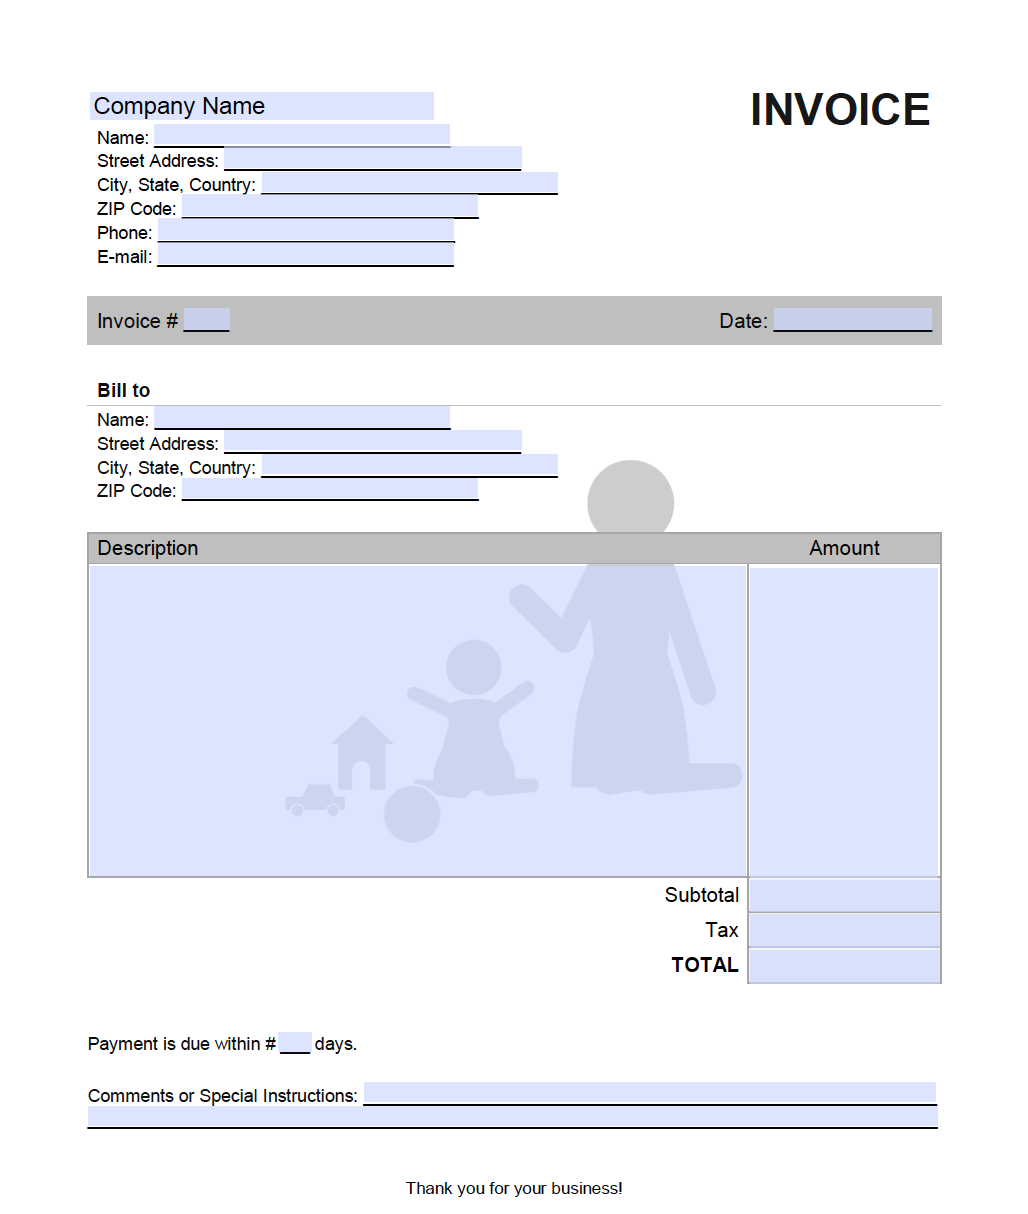 babysitter-receipt-example-invoice-template